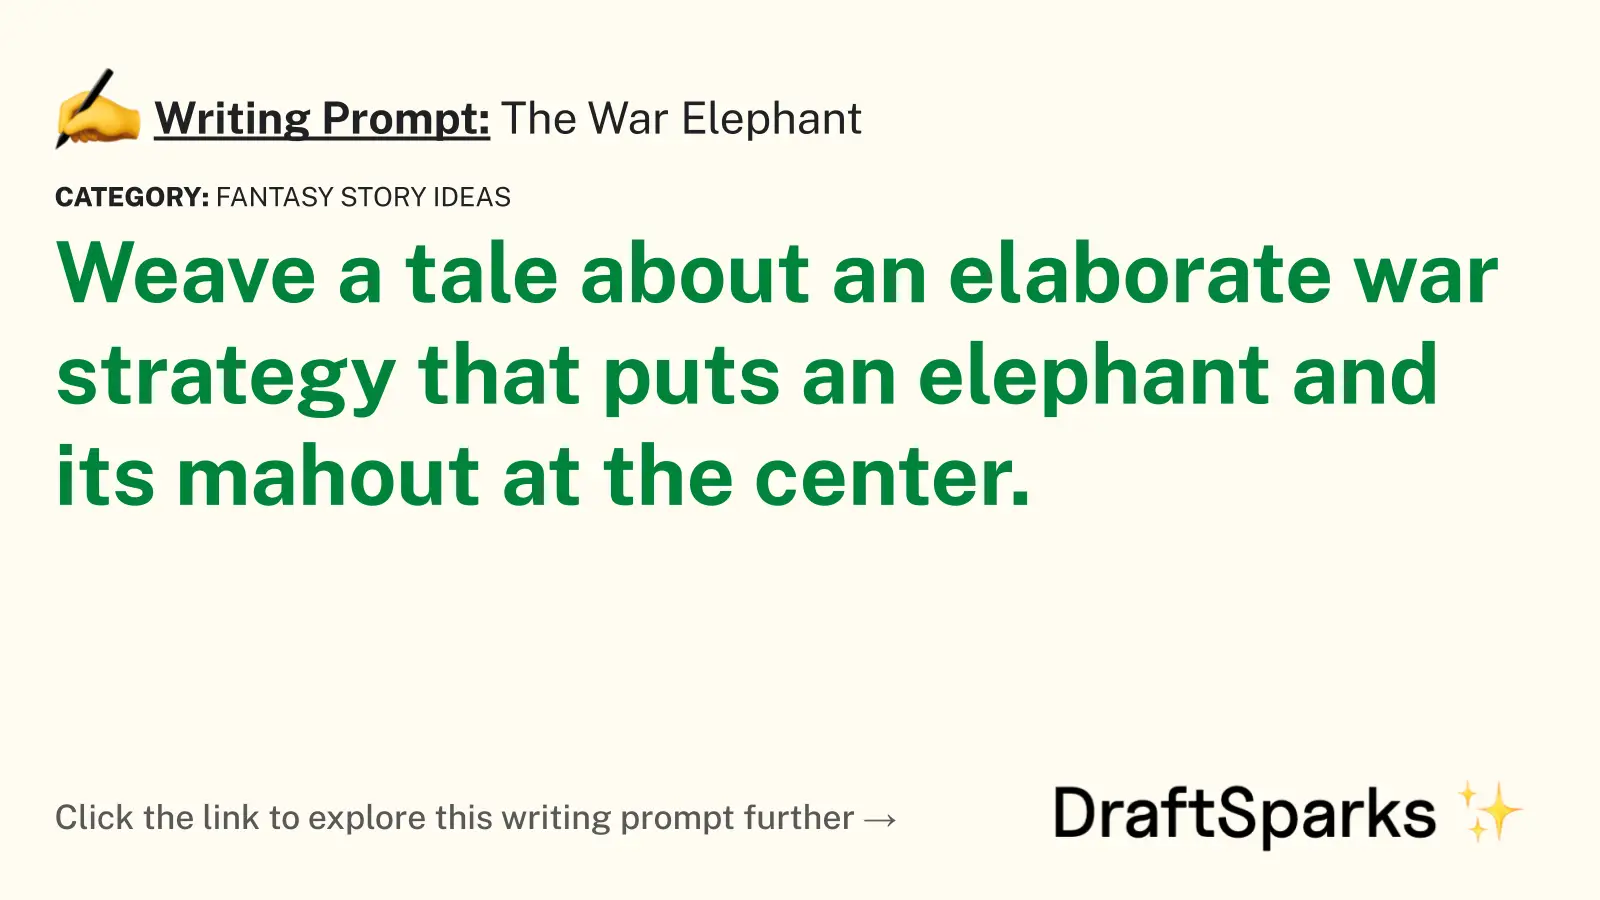 The War Elephant